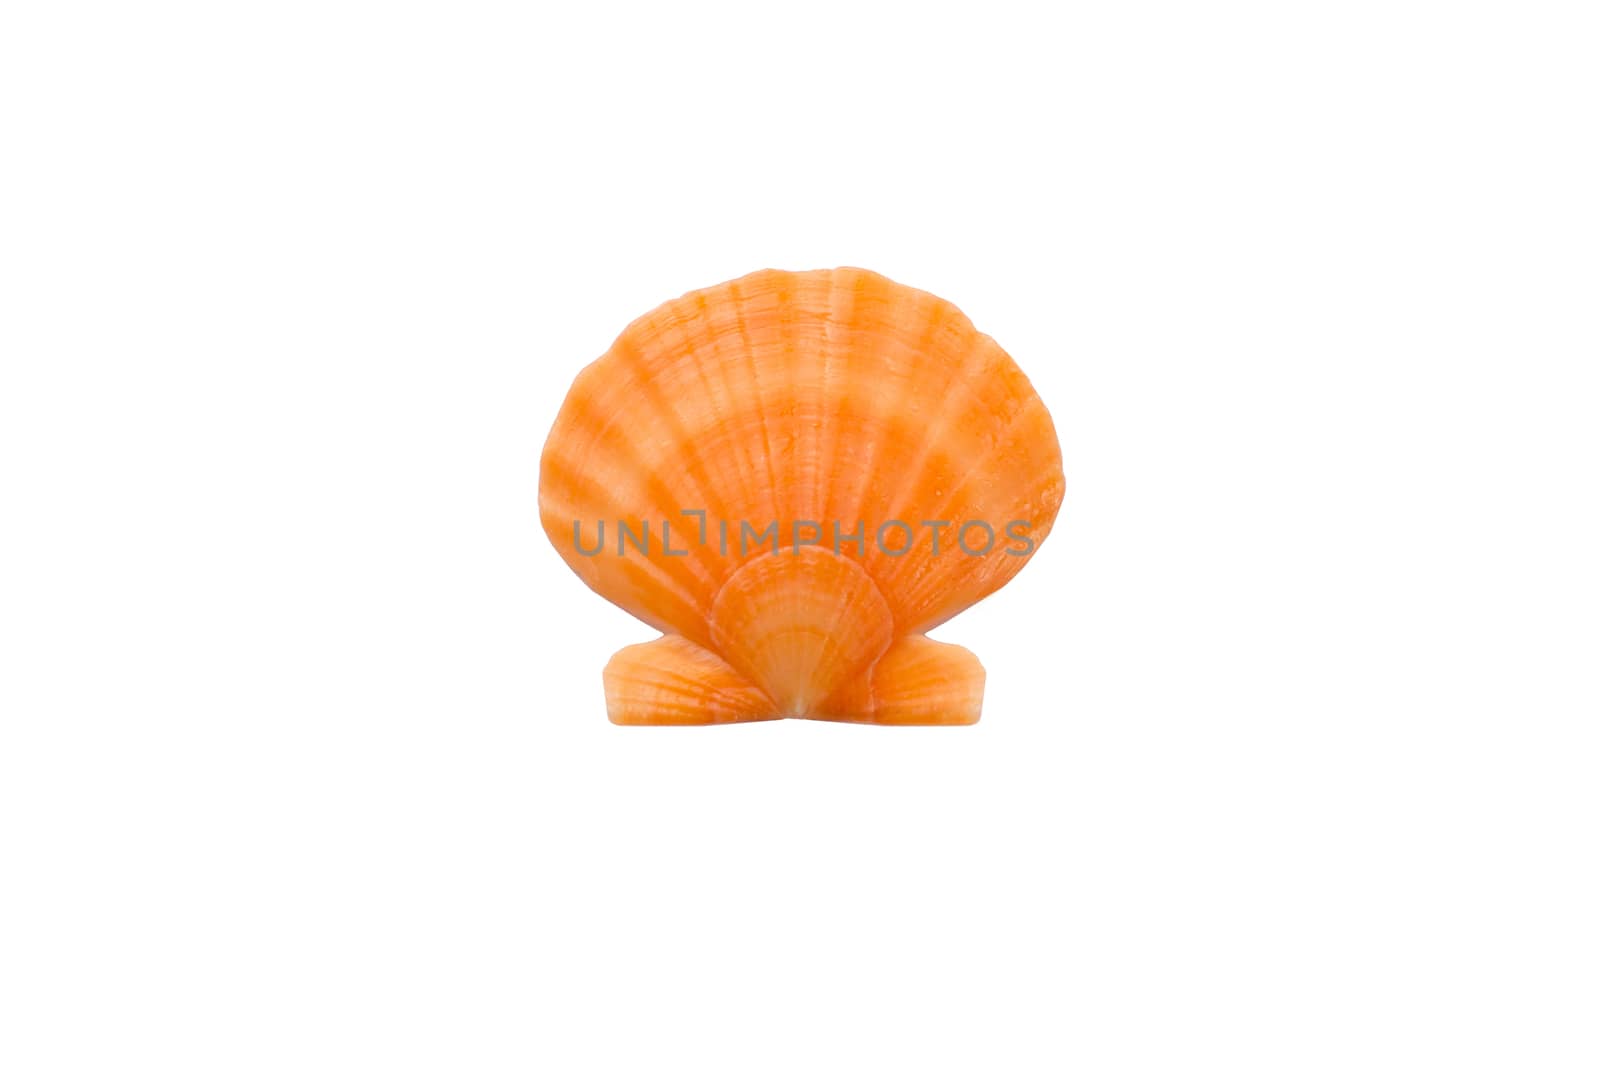 Marine life: light bright yellow orange round pearl seashell close-up on white background